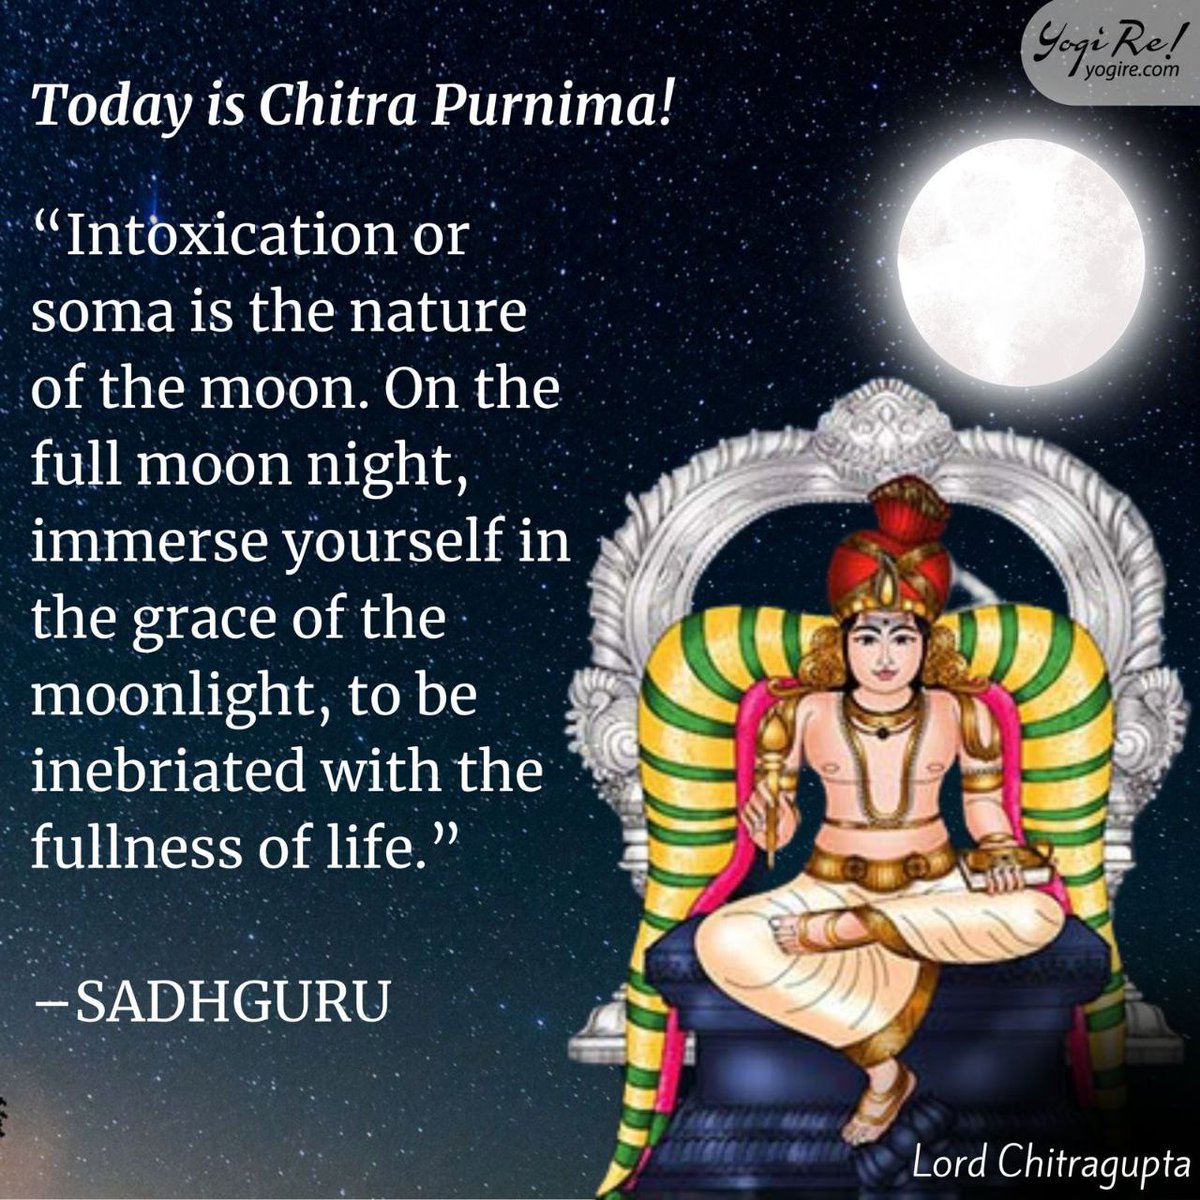 𝐓𝐨𝐝𝐚𝐲, 𝐀𝐩𝐫𝐢𝐥 𝟐𝟑 𝐢𝐬 𝐂𝐡𝐢𝐭𝐫𝐚 𝐏𝐮𝐫𝐧𝐢𝐦𝐚!

Chitra Pournami is the full moon day falling on Chaitra month of the Hindu calendar.

This Chitra Purnima, join the live webstream - 
isha.sadhguru.org/linga-bhairavi…

#Sadhguru #isha #yogire #chitrapournami #purnima